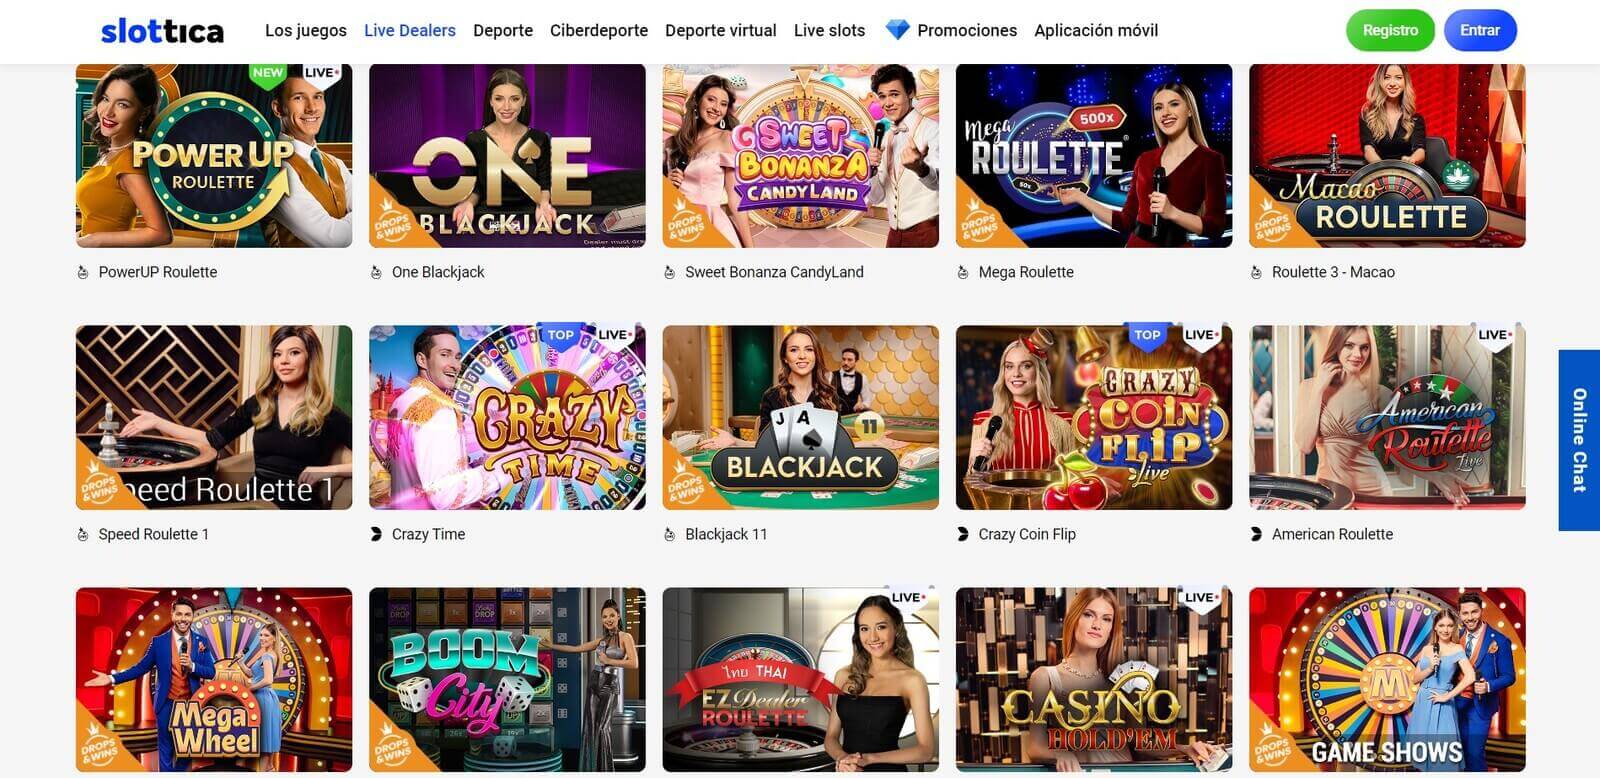 Casino en vivo de Slottica online en Latinoamérica